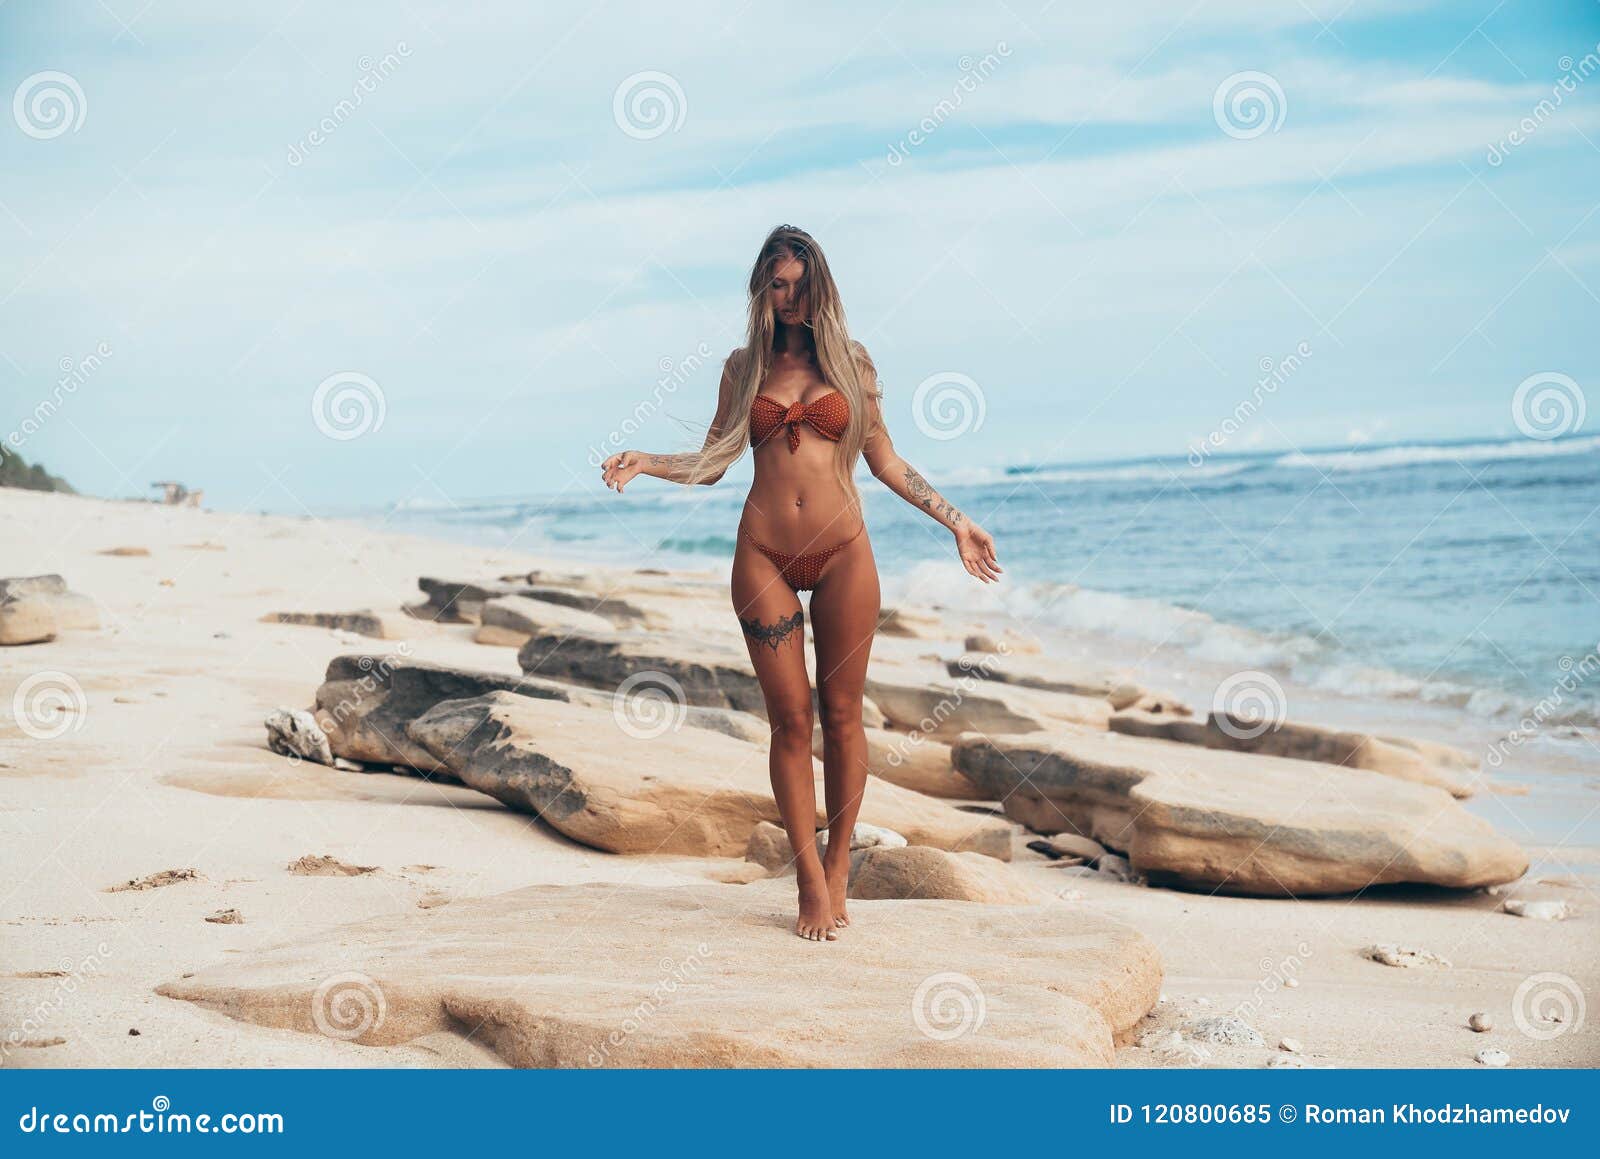 Girls sex beach nude Baring It